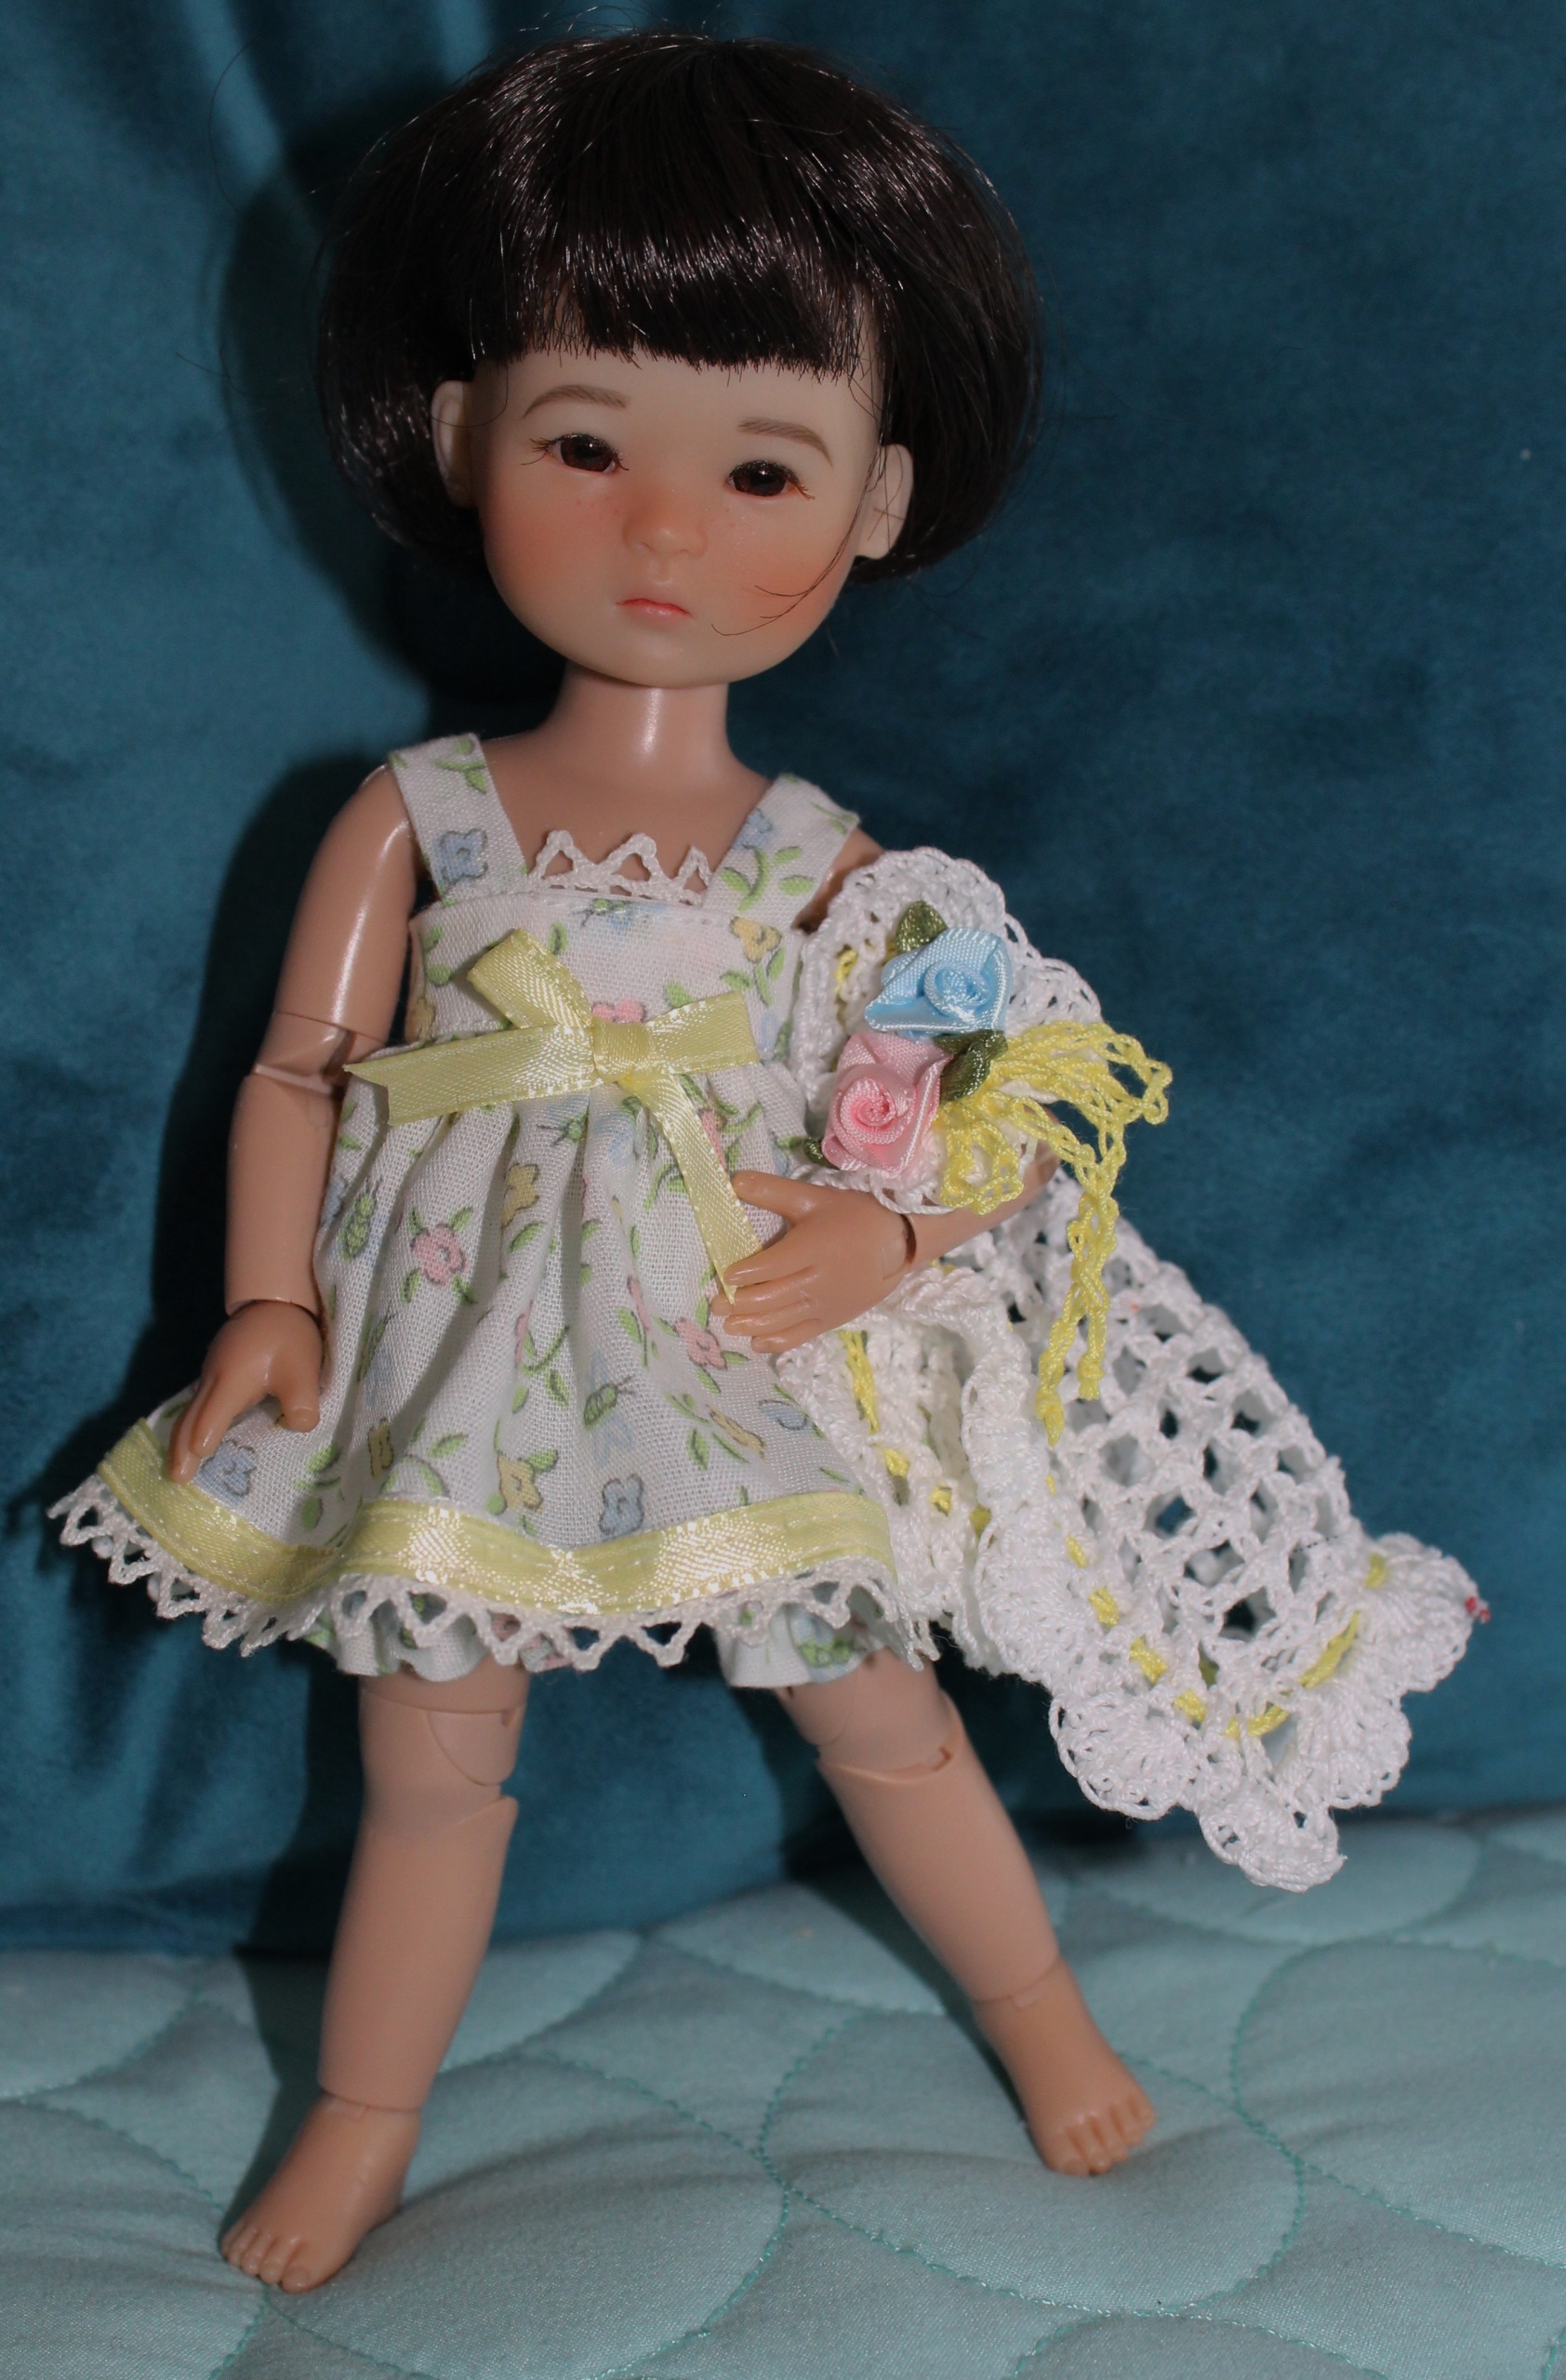 Baby Doll PJ's & Blankie fits Riley Kish/Ten Ping